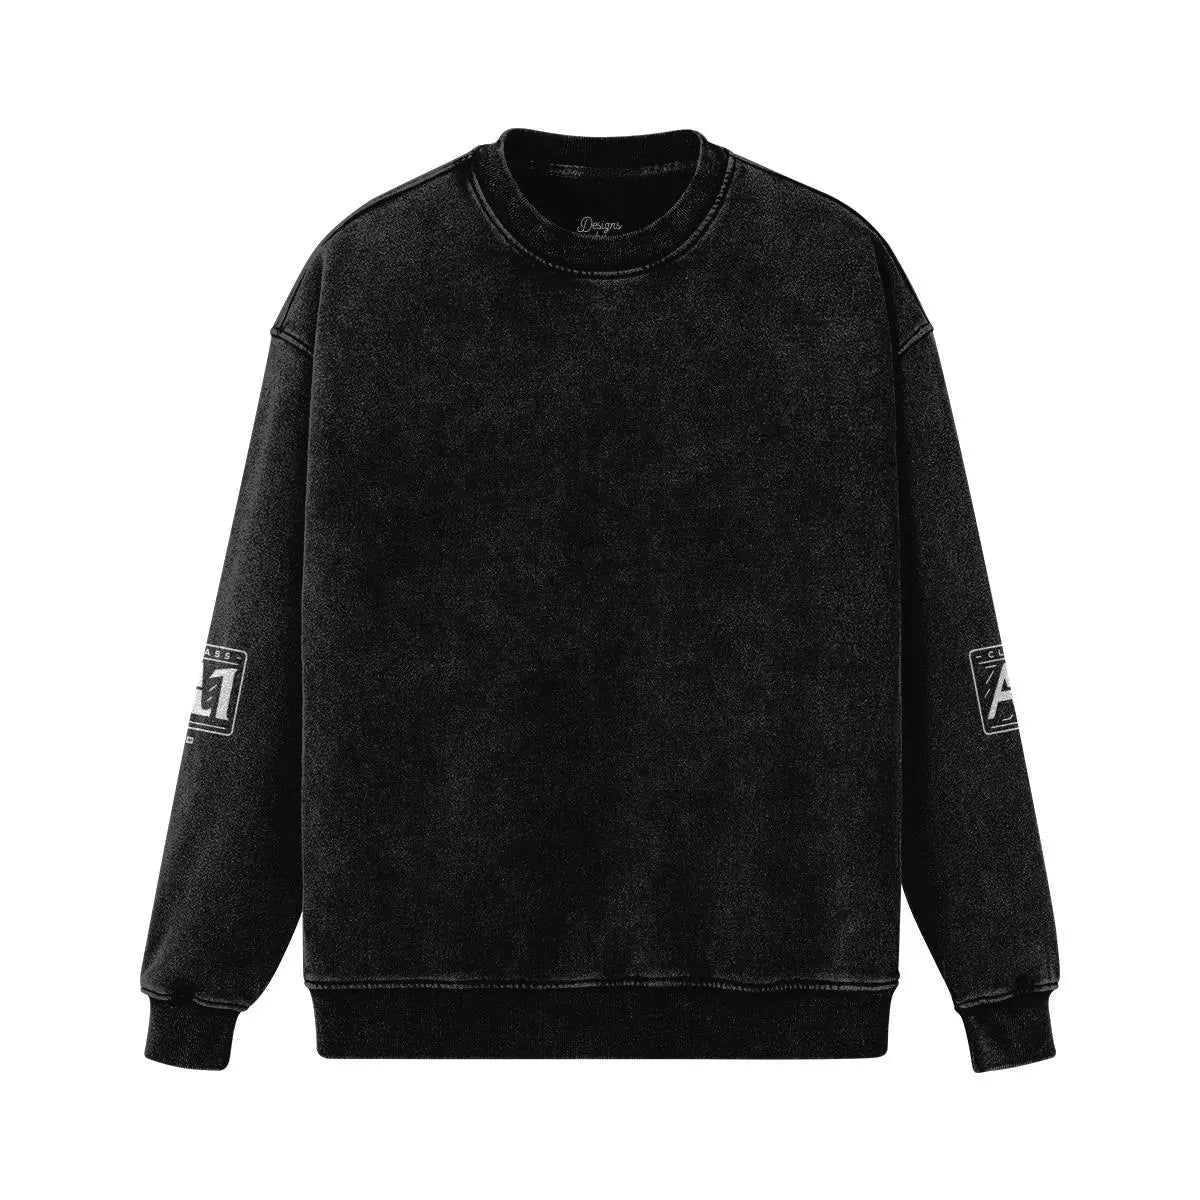 Faded Black - ClassA1 On My Back Print Oversized Worn Effect Sweatshirt - Sweatshirt at TFC&H Co.